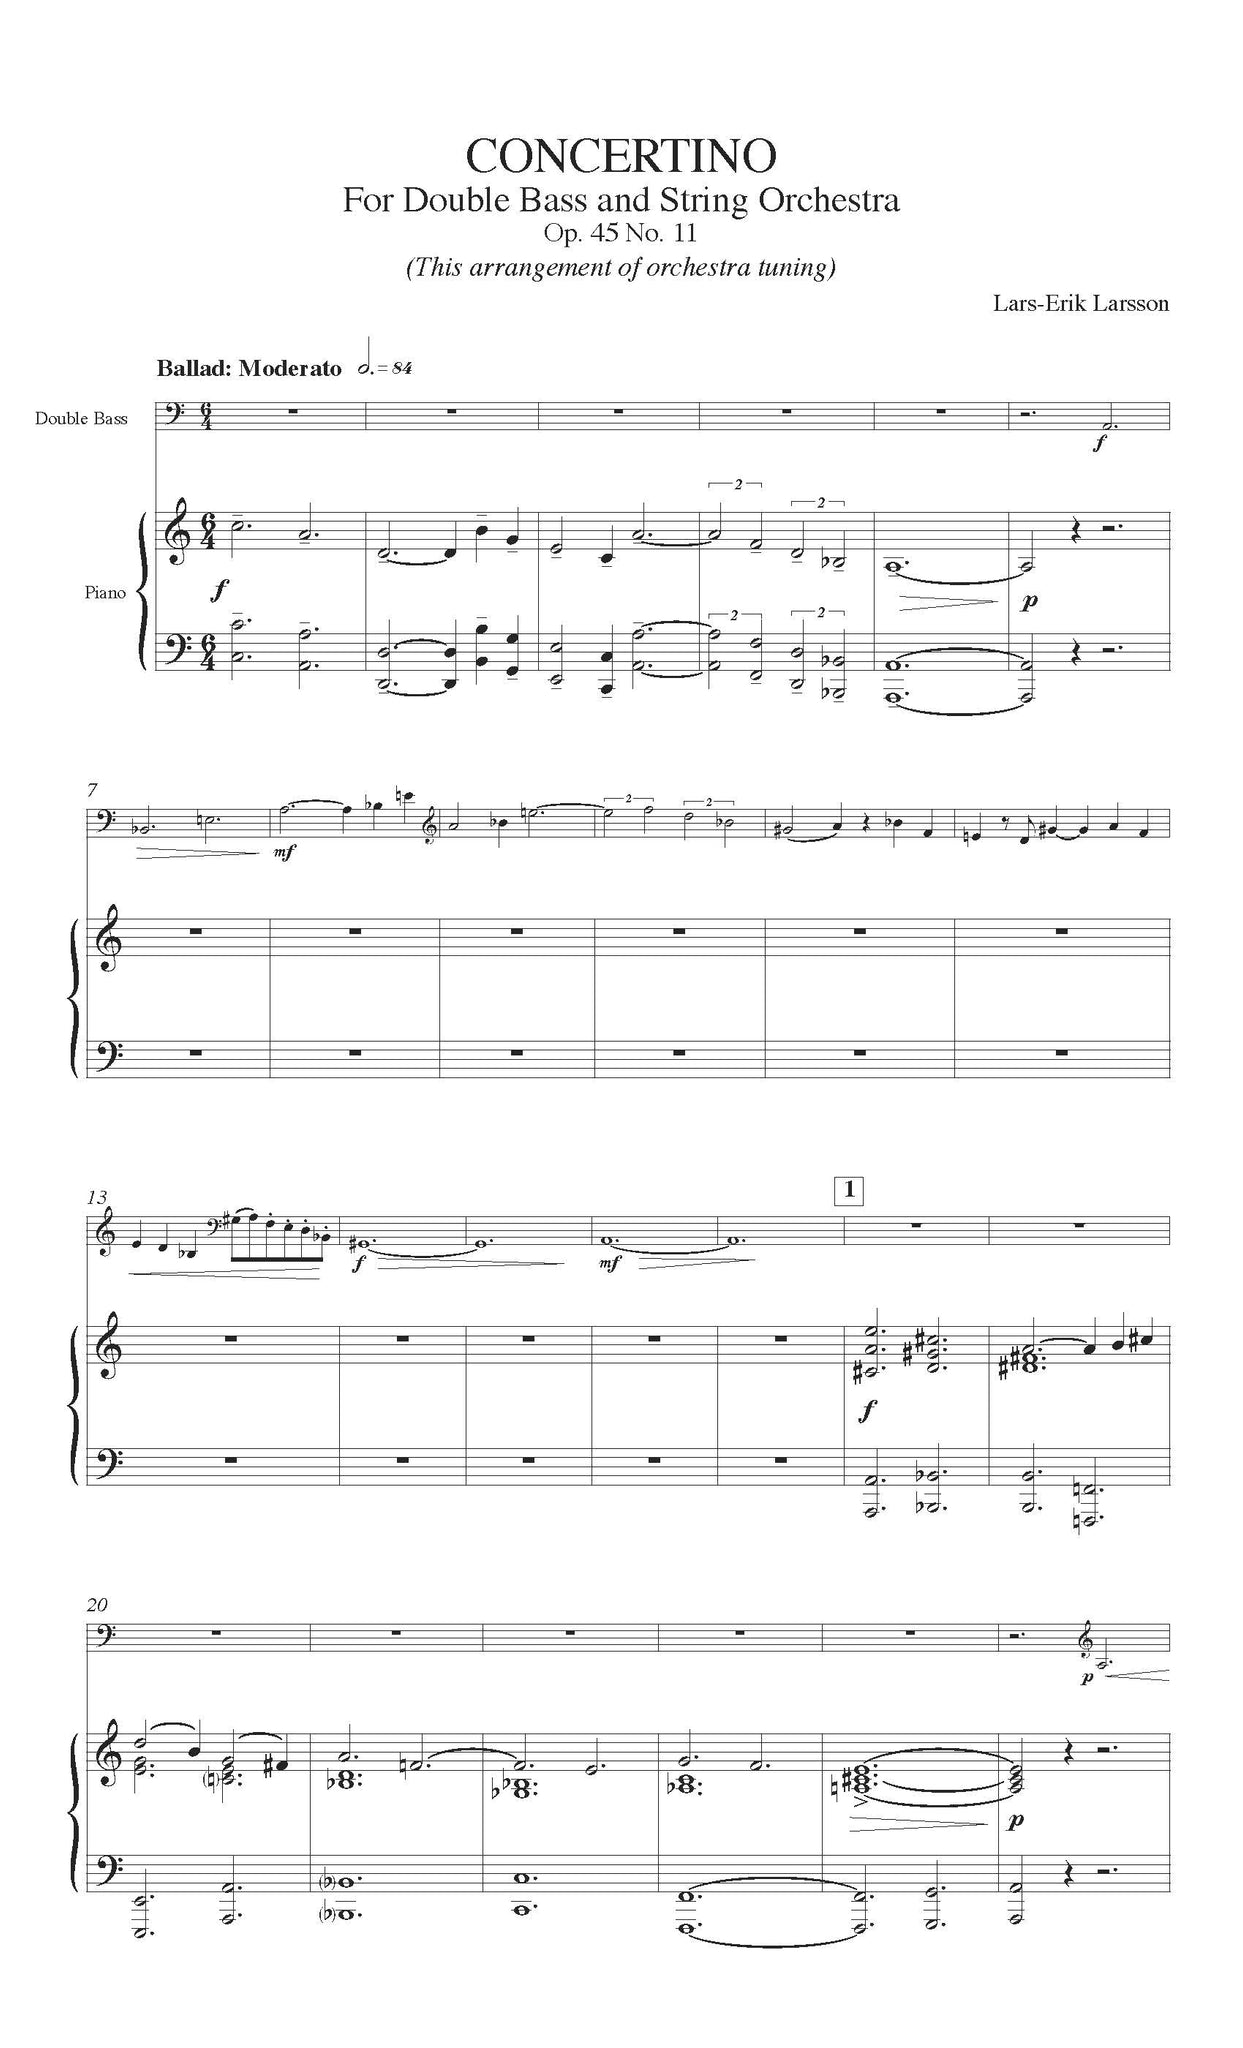 Larsson - Concertino Opus 45 No. 11 Sheet Music